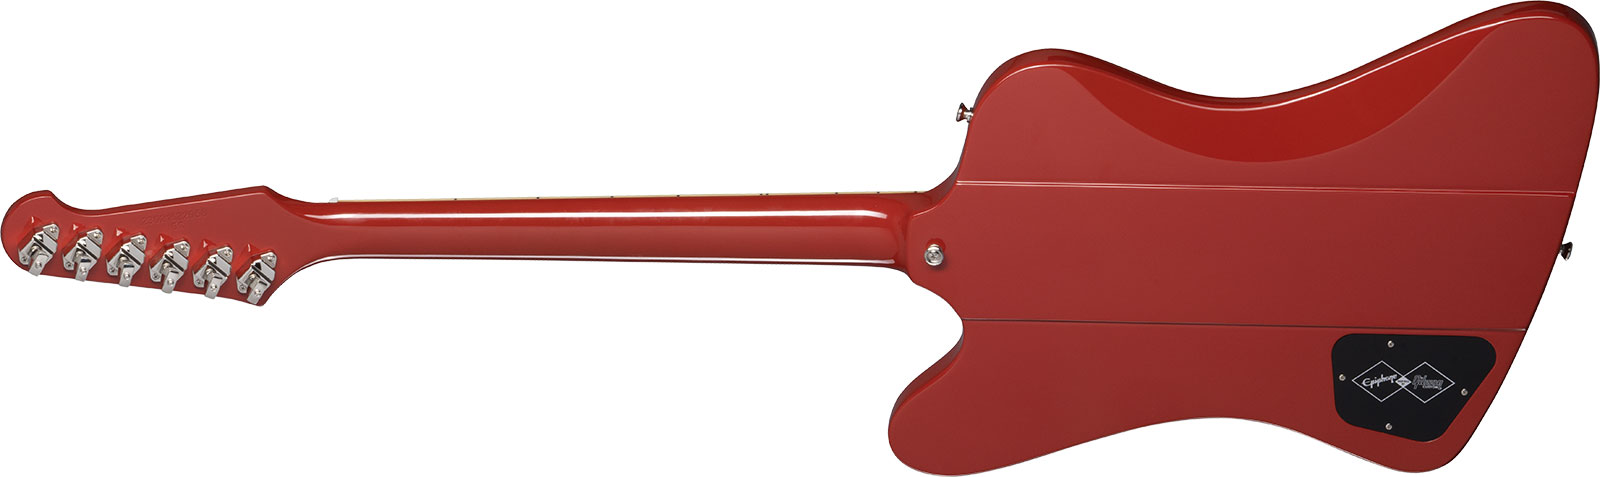 Epiphone Firebird V 1963 Maestro Vibrola Inspired By Gibson Custom 2mh Trem Lau - Ember Red - Retro rock electric guitar - Variation 1